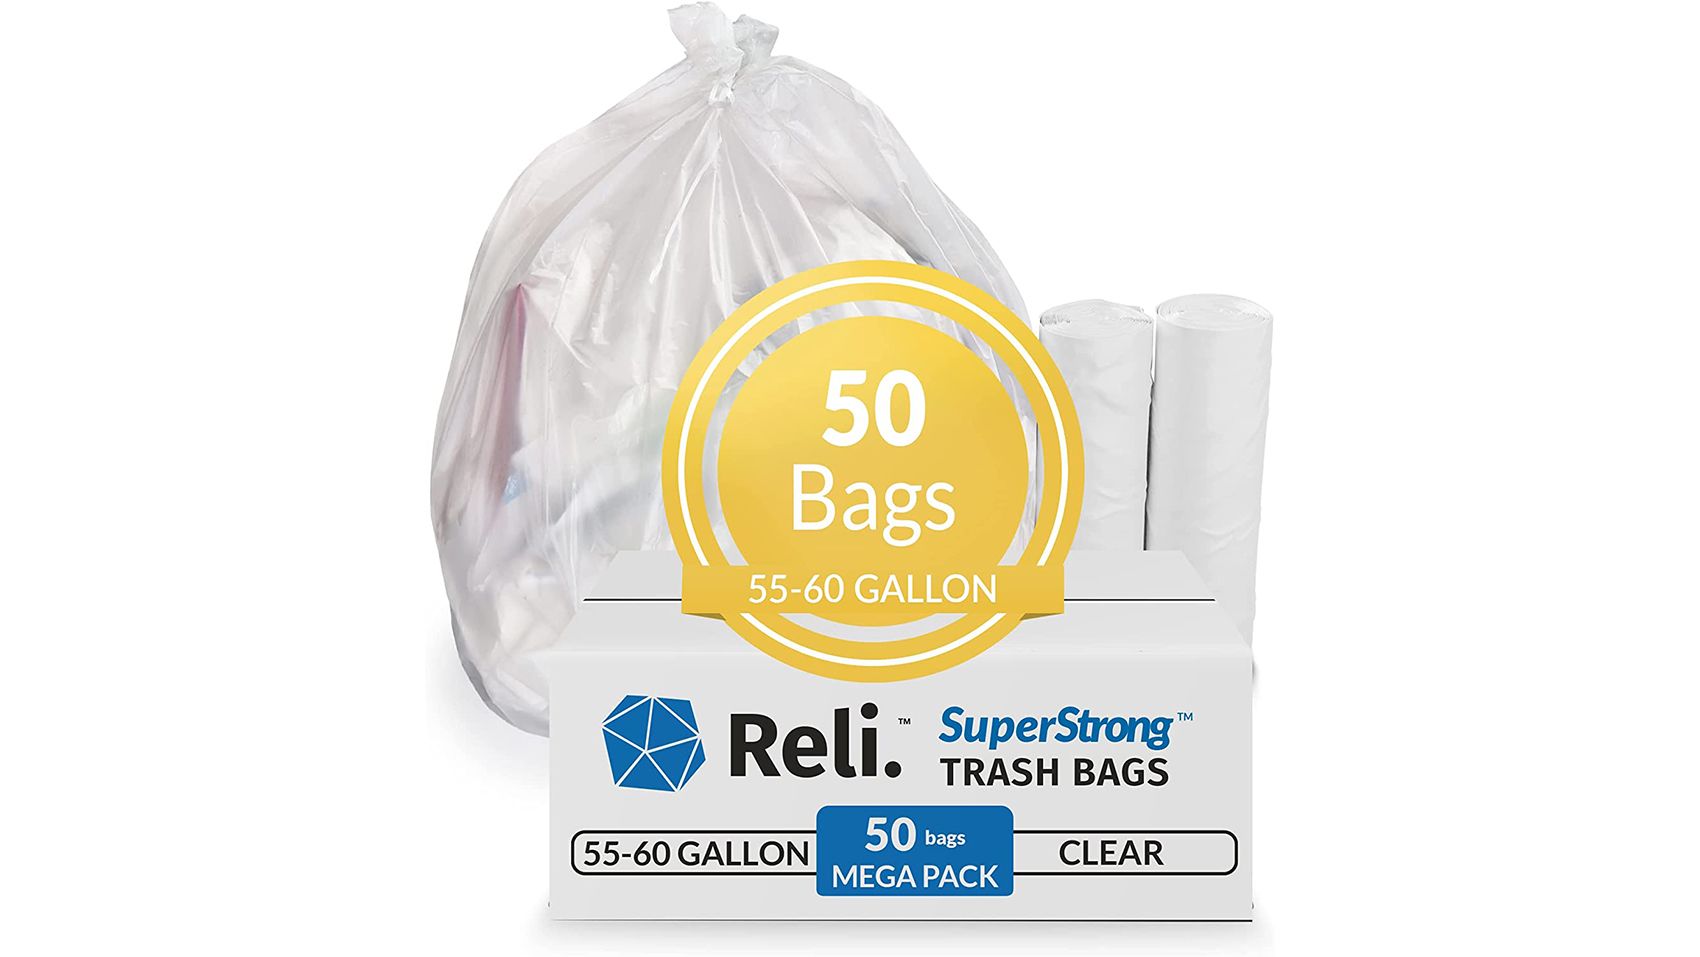 https://media.cnn.com/api/v1/images/stellar/prod/221112140950-underscored-reli-supervalue-55-gallon-trash-bags-50-pack.jpg?c=original